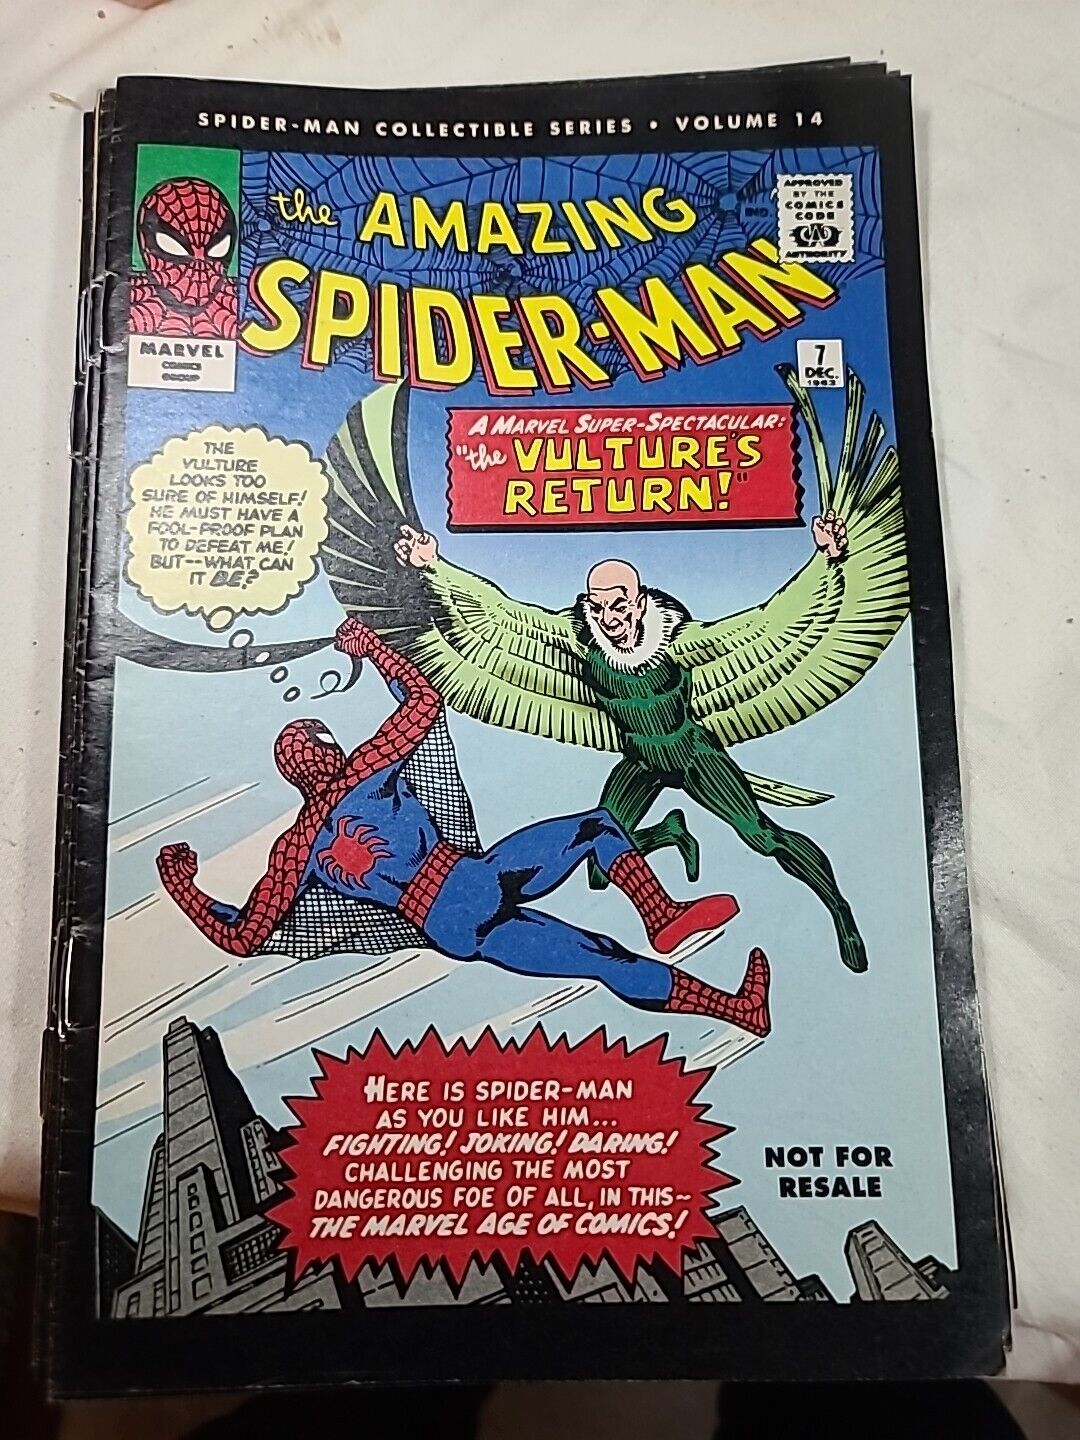 Spider-Man Collectible Series Volume 14 Amazing Spider-Man Reprints